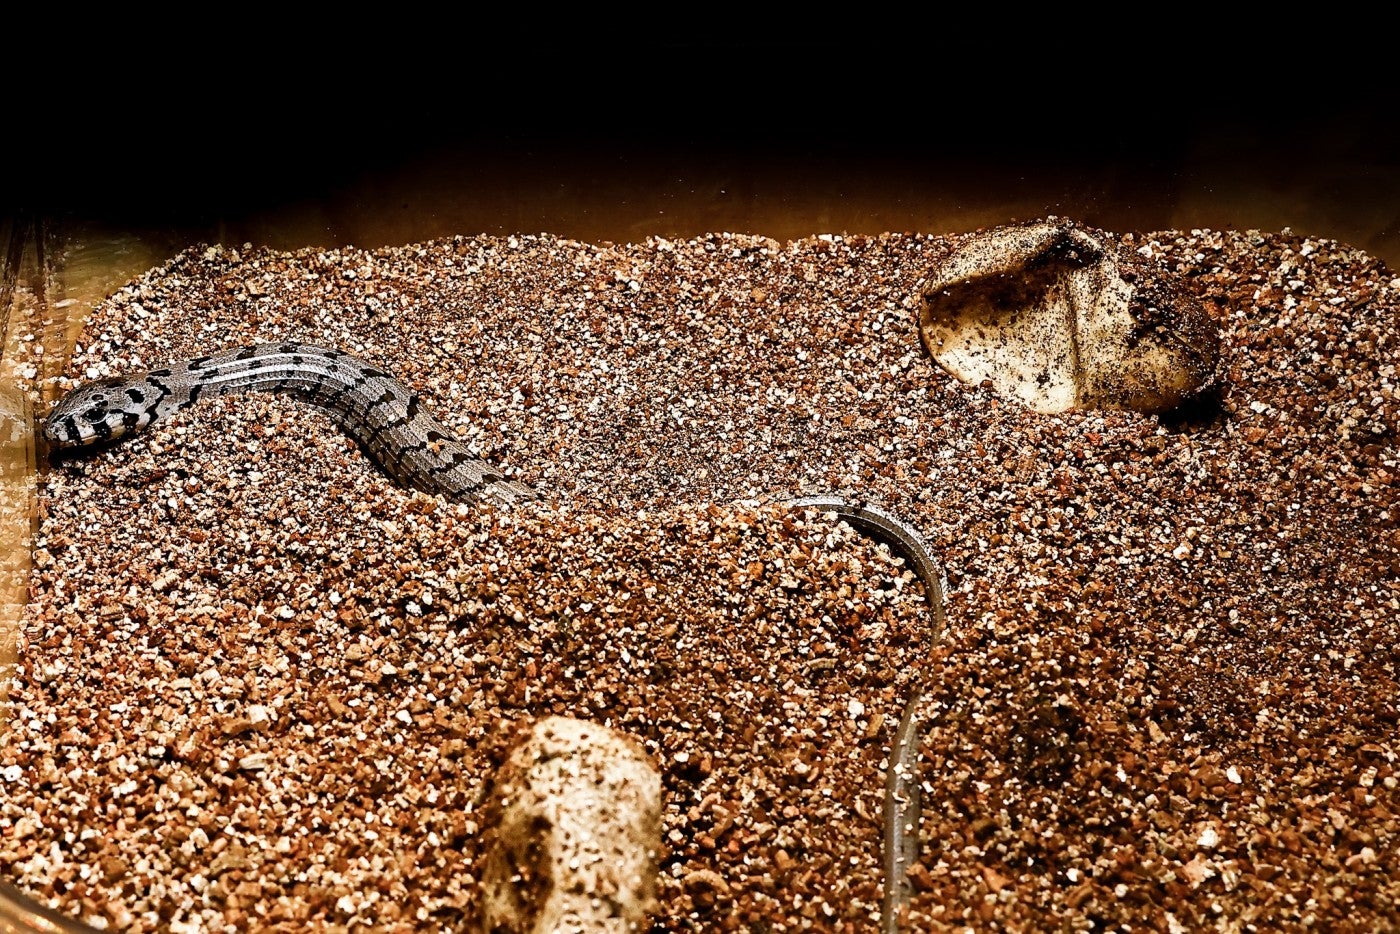 European glass lizard hatchling next to its egg. 